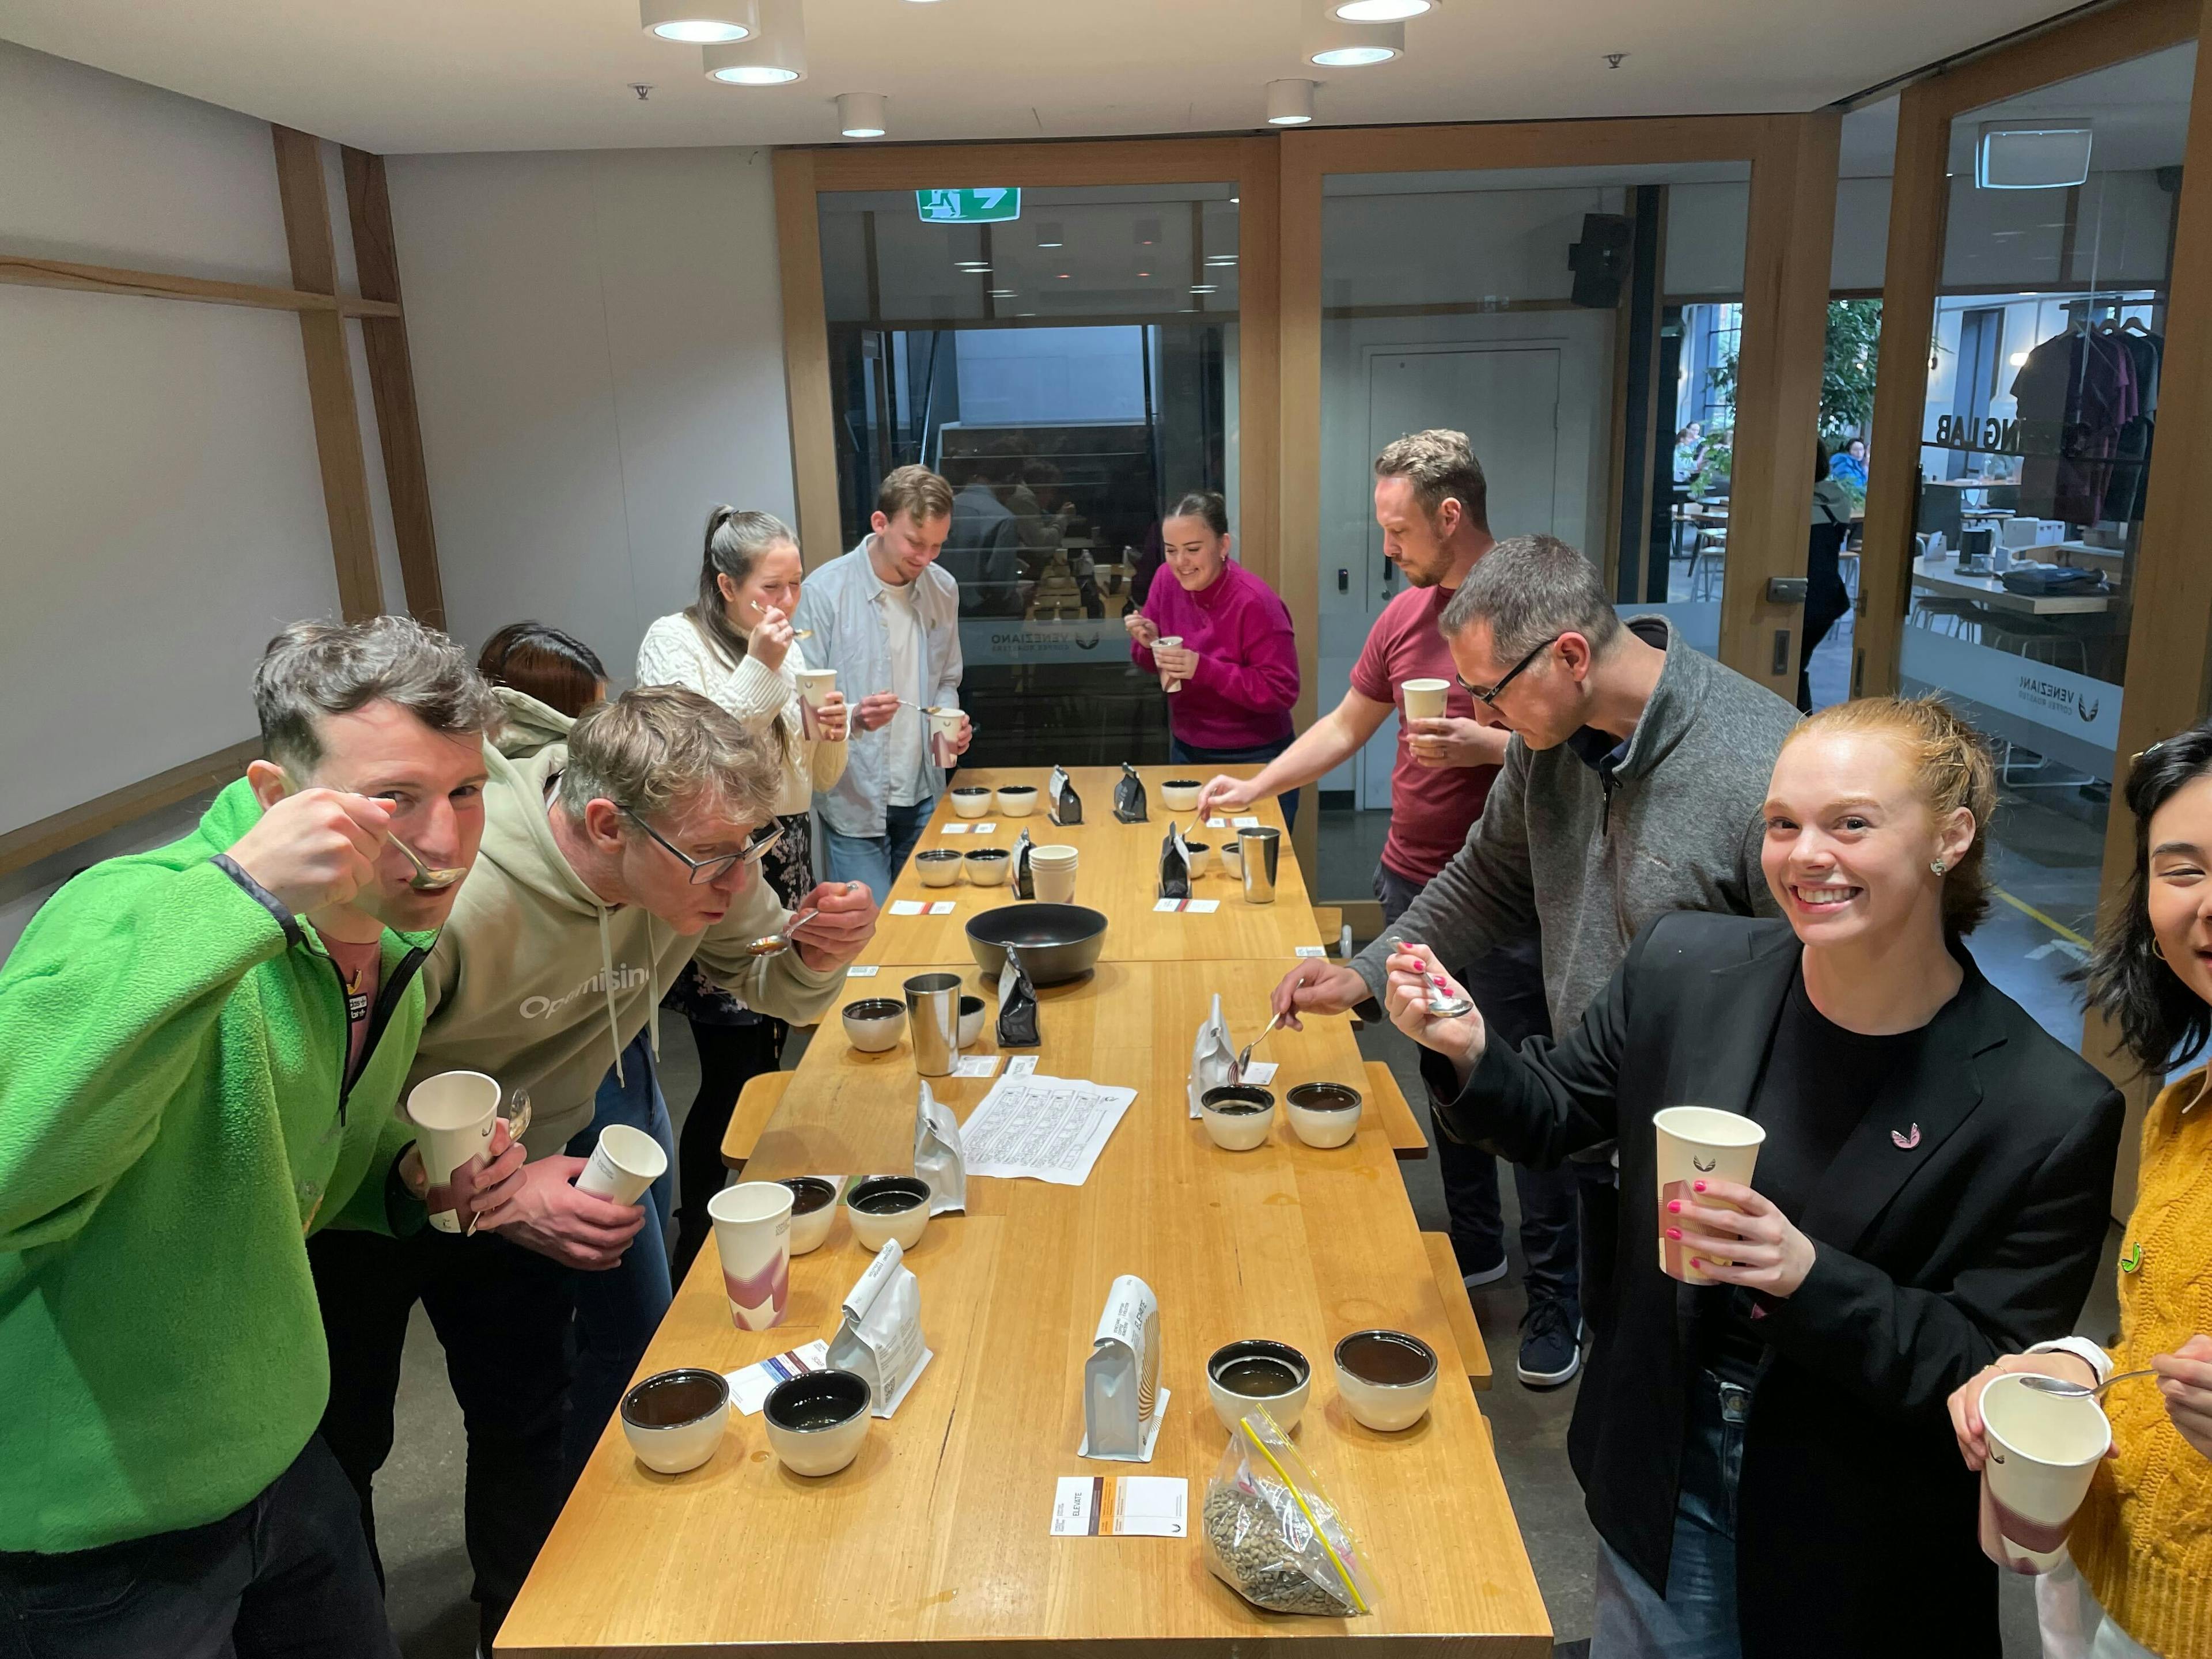 Optimising team enjoys the coffee workshop